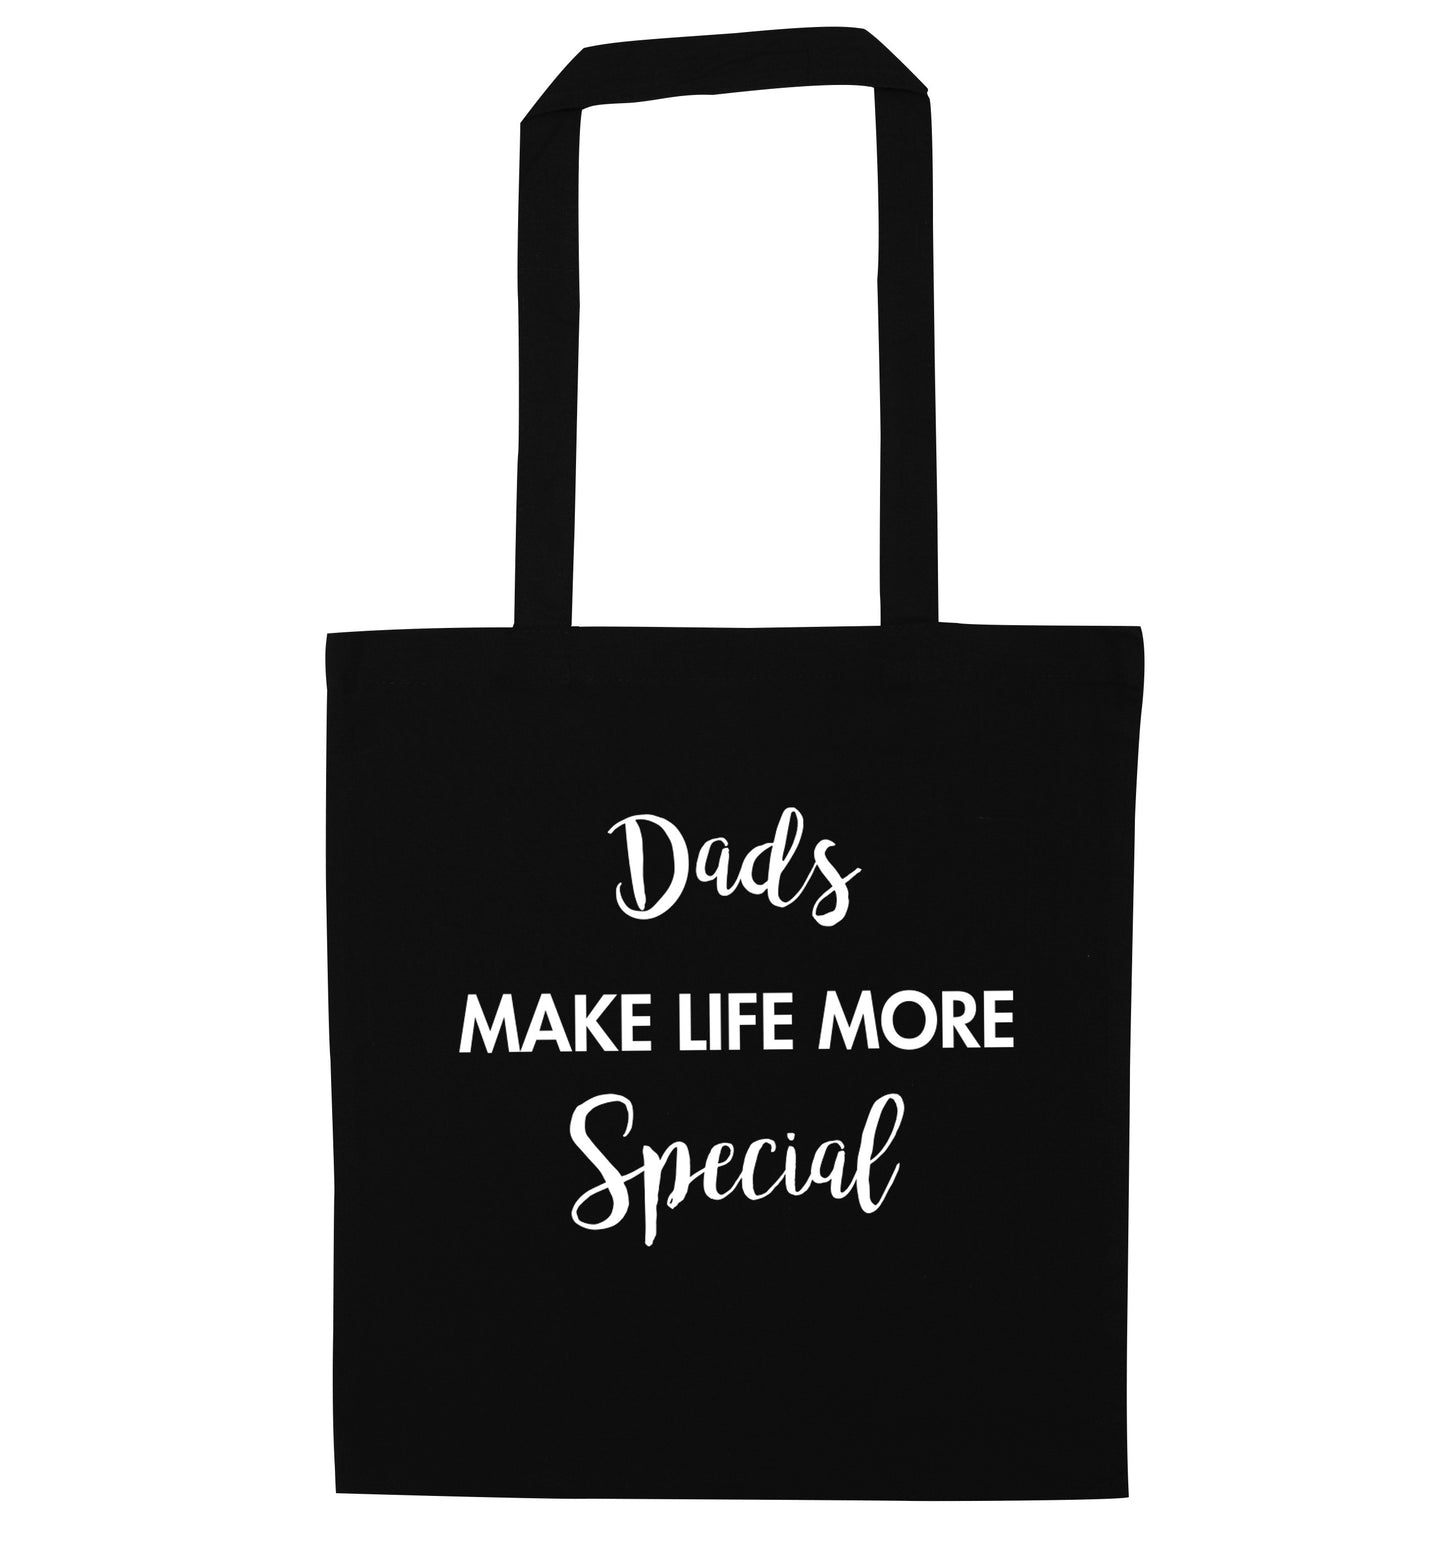 Dads make life more special black tote bag